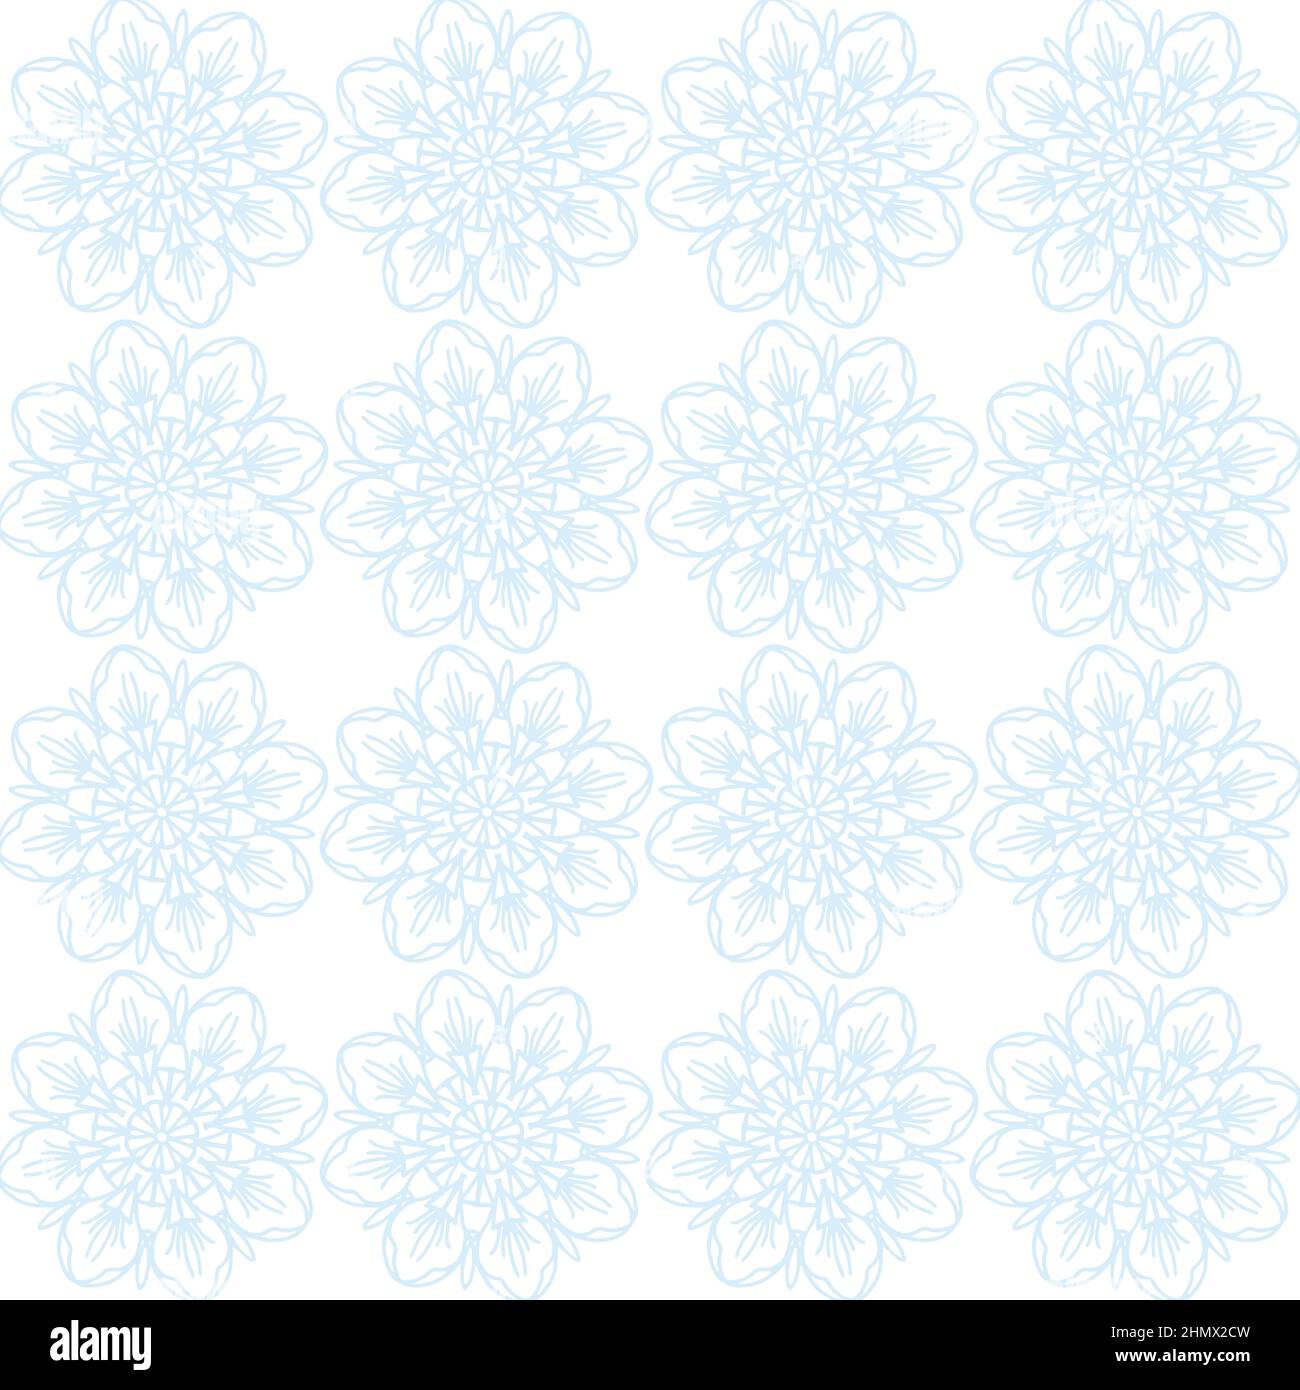 Abstraktes blaues Schneeflocke-Nahtloses Muster mit Mandala-Ornament Stock Vektor